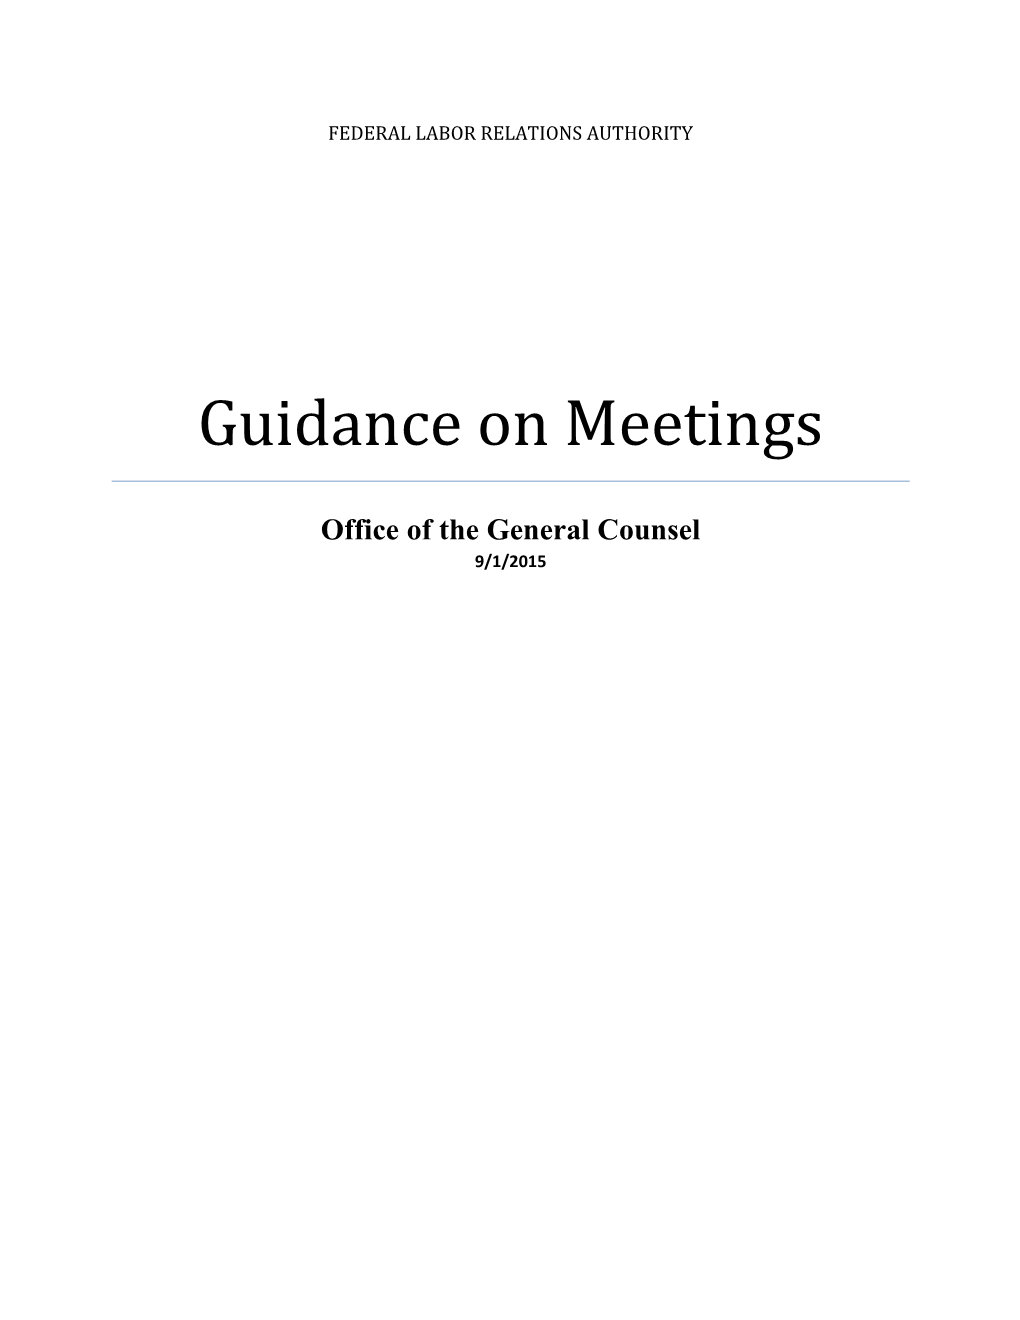 Guidance on Meetings